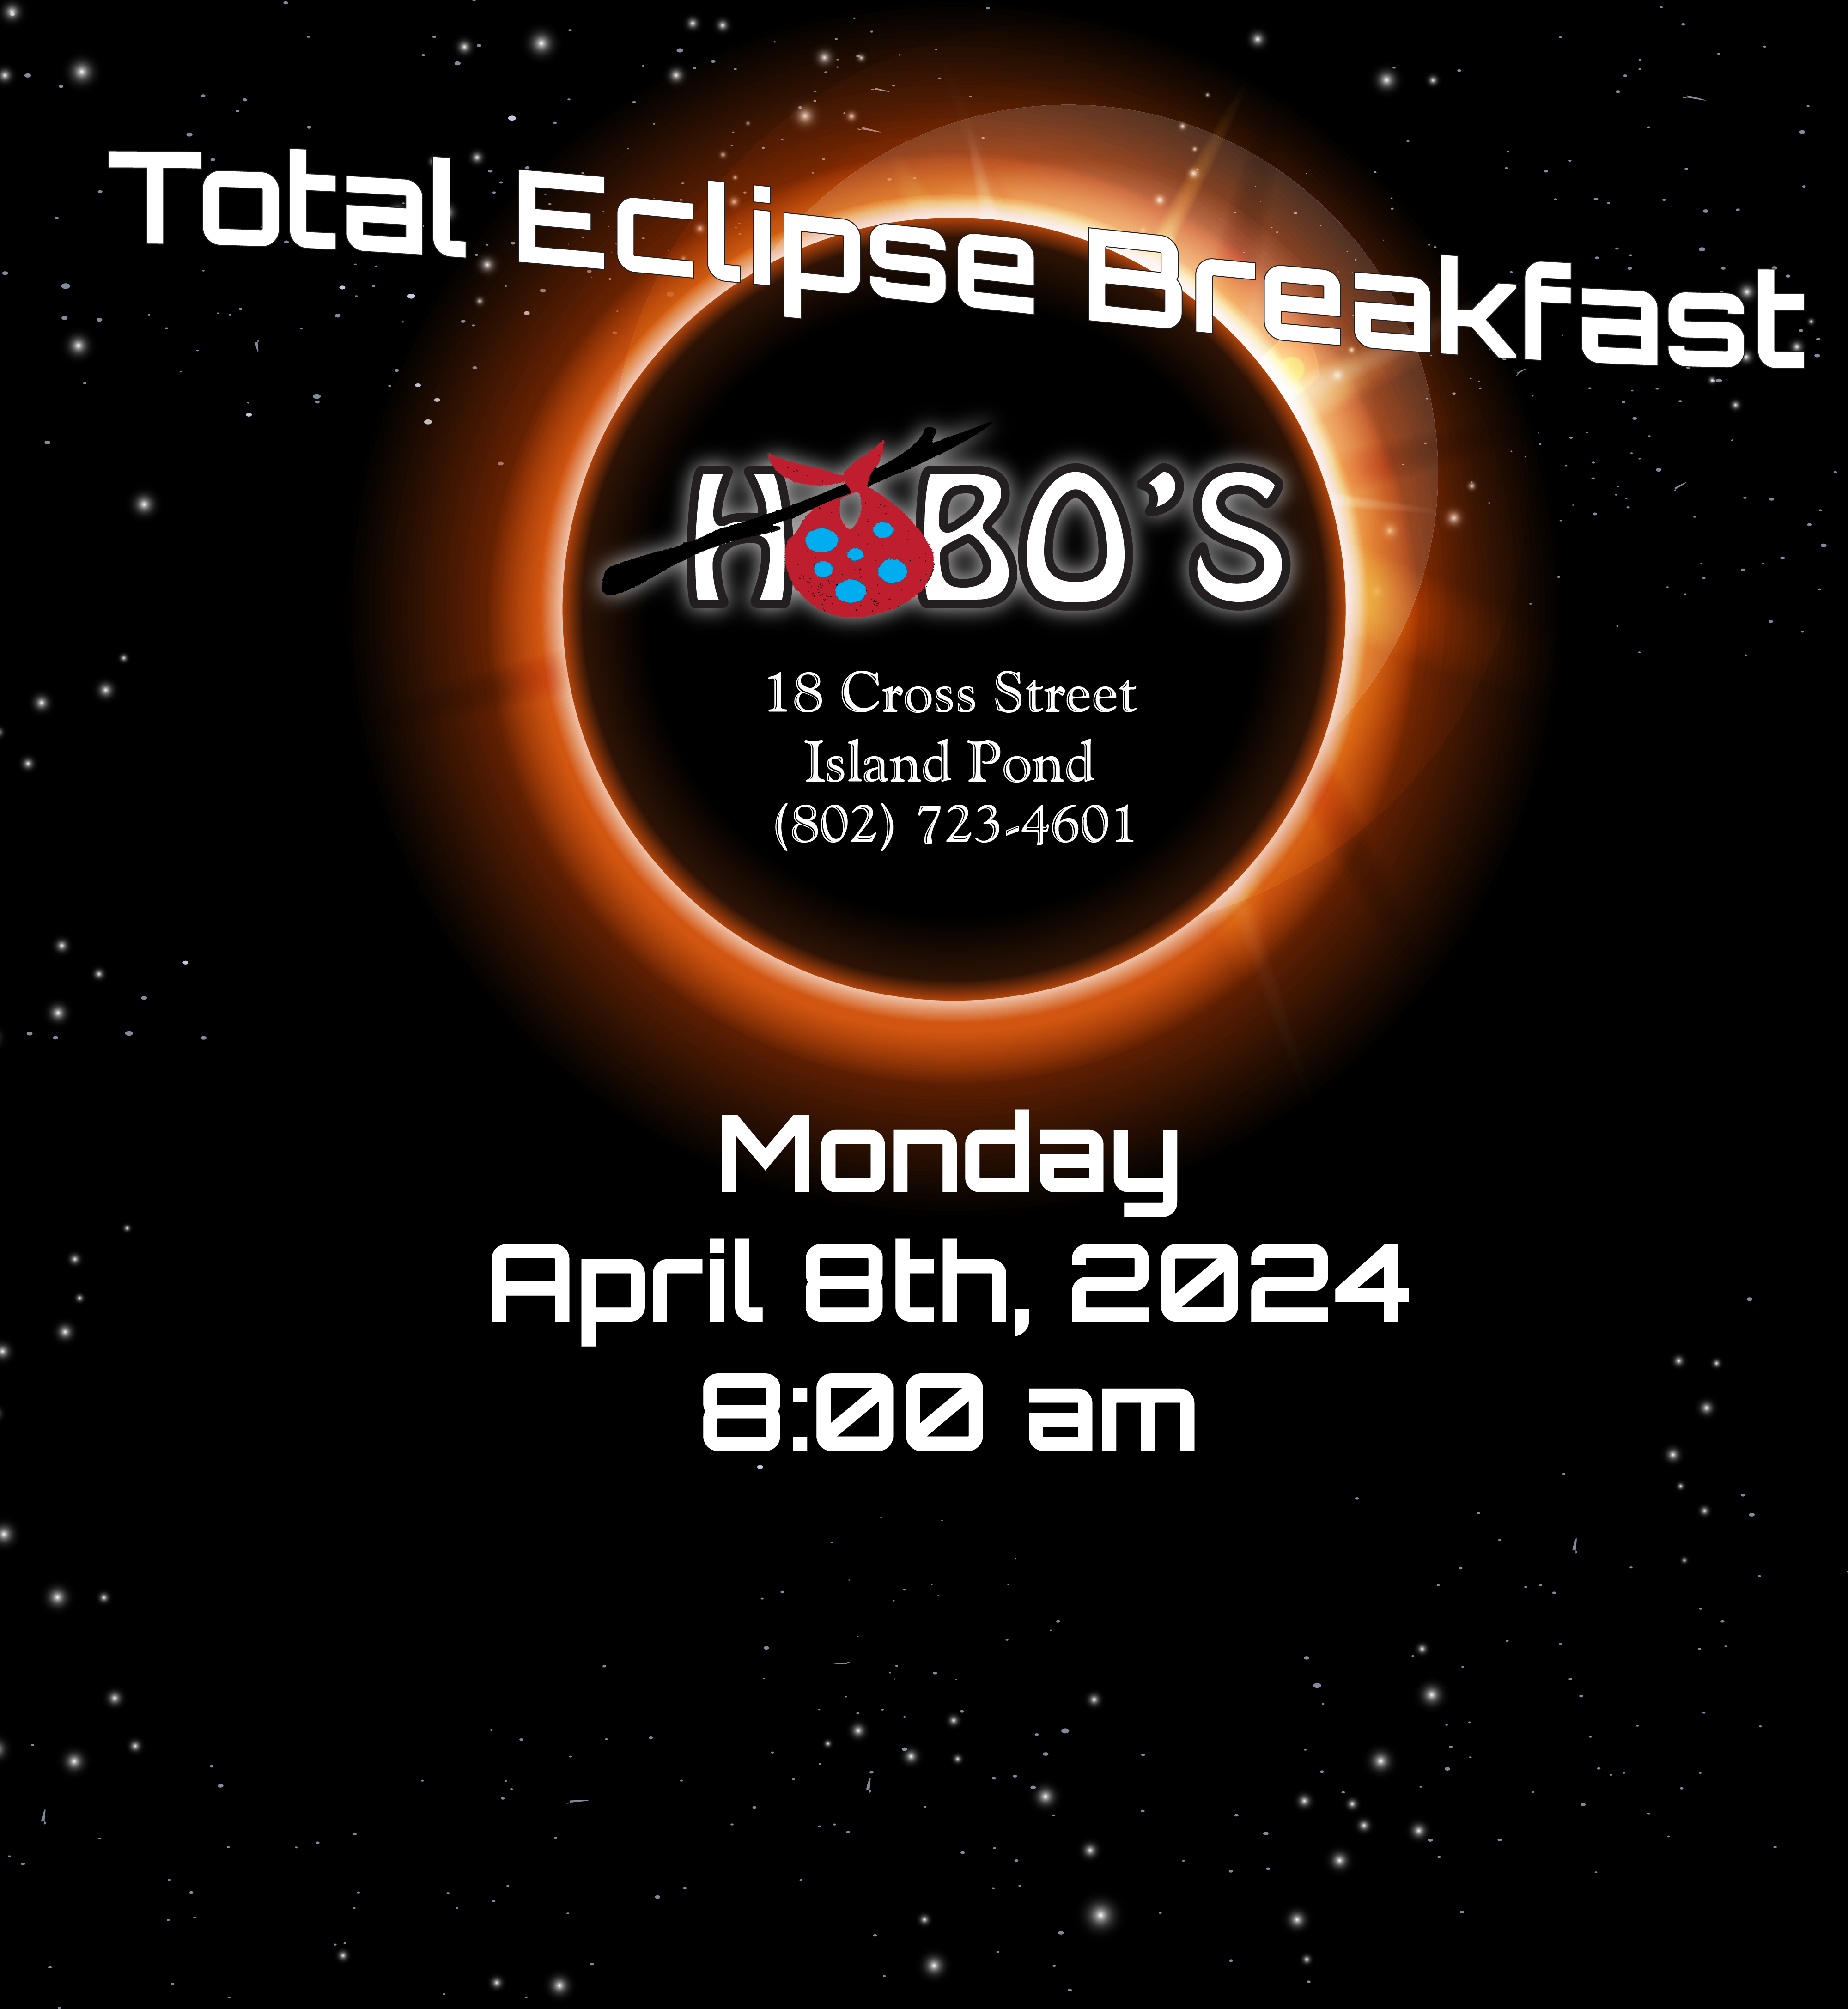 Hobo's Total Eclipse Breakfast